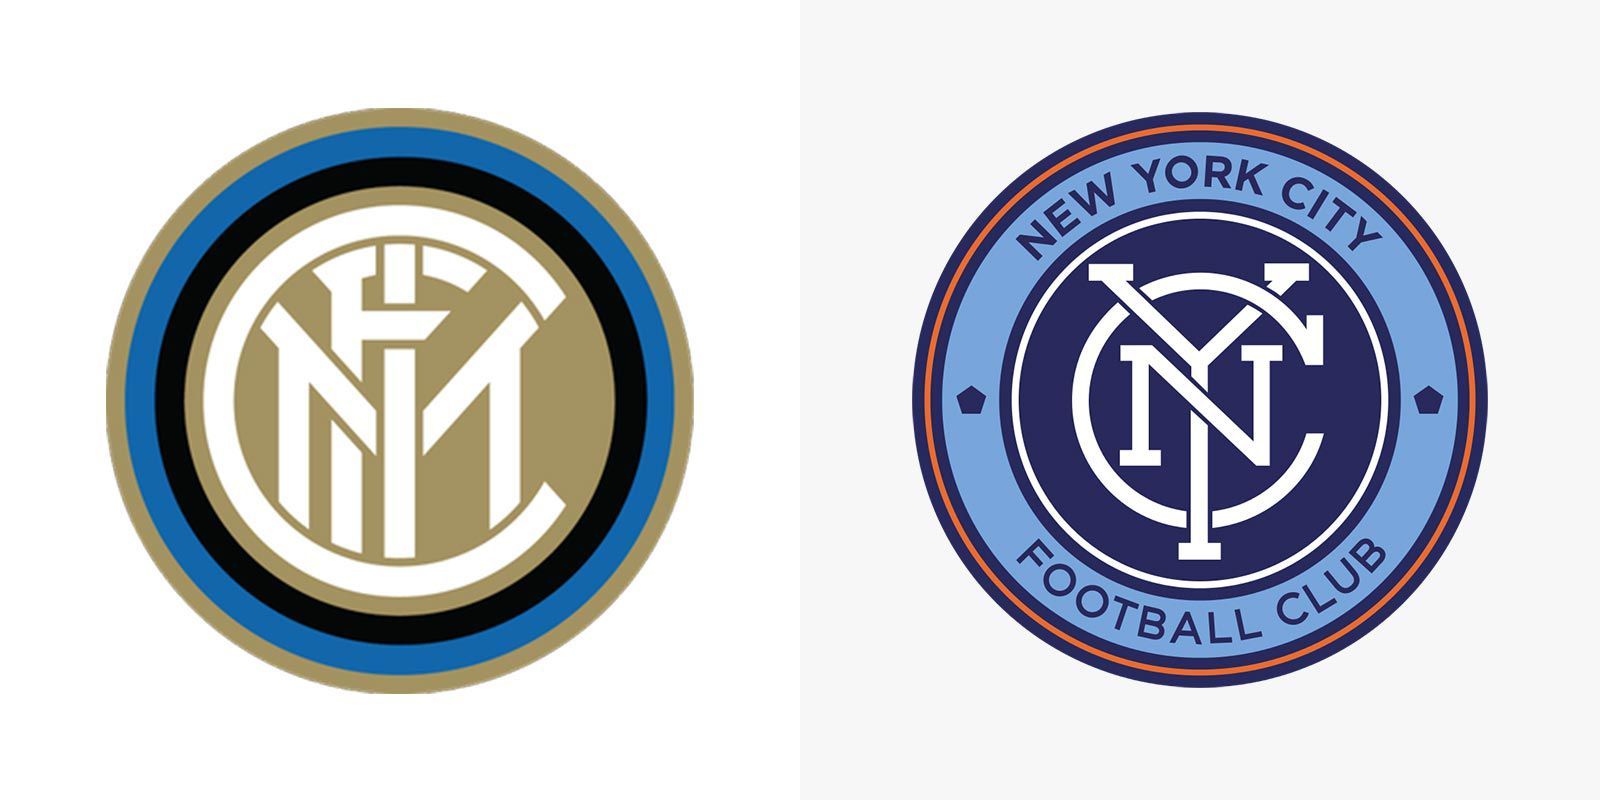 Football club secretly change badge to include optical illusion